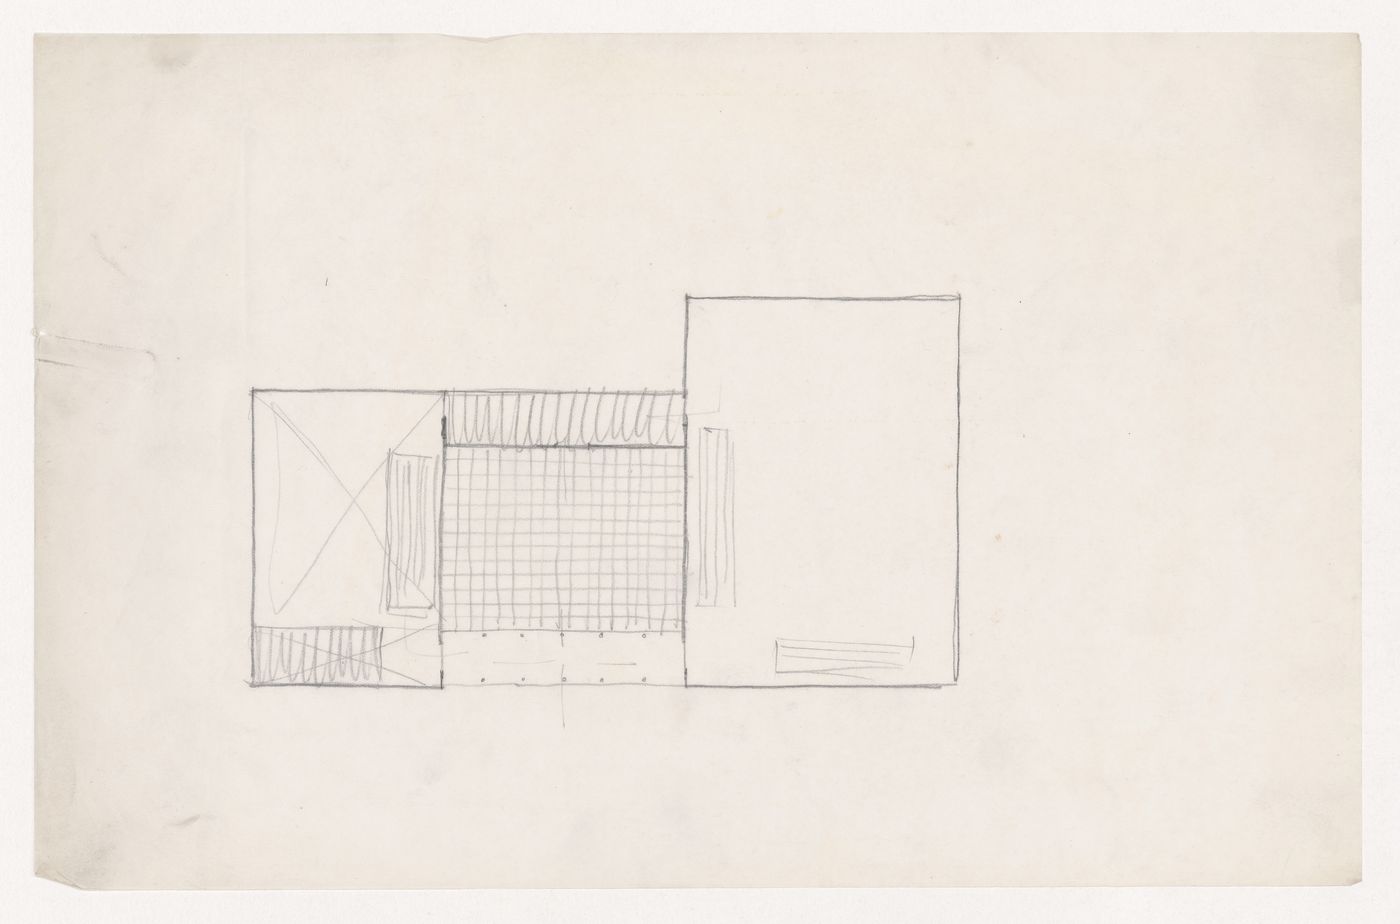 Sketch plan for the Gymnasium and Natatorium